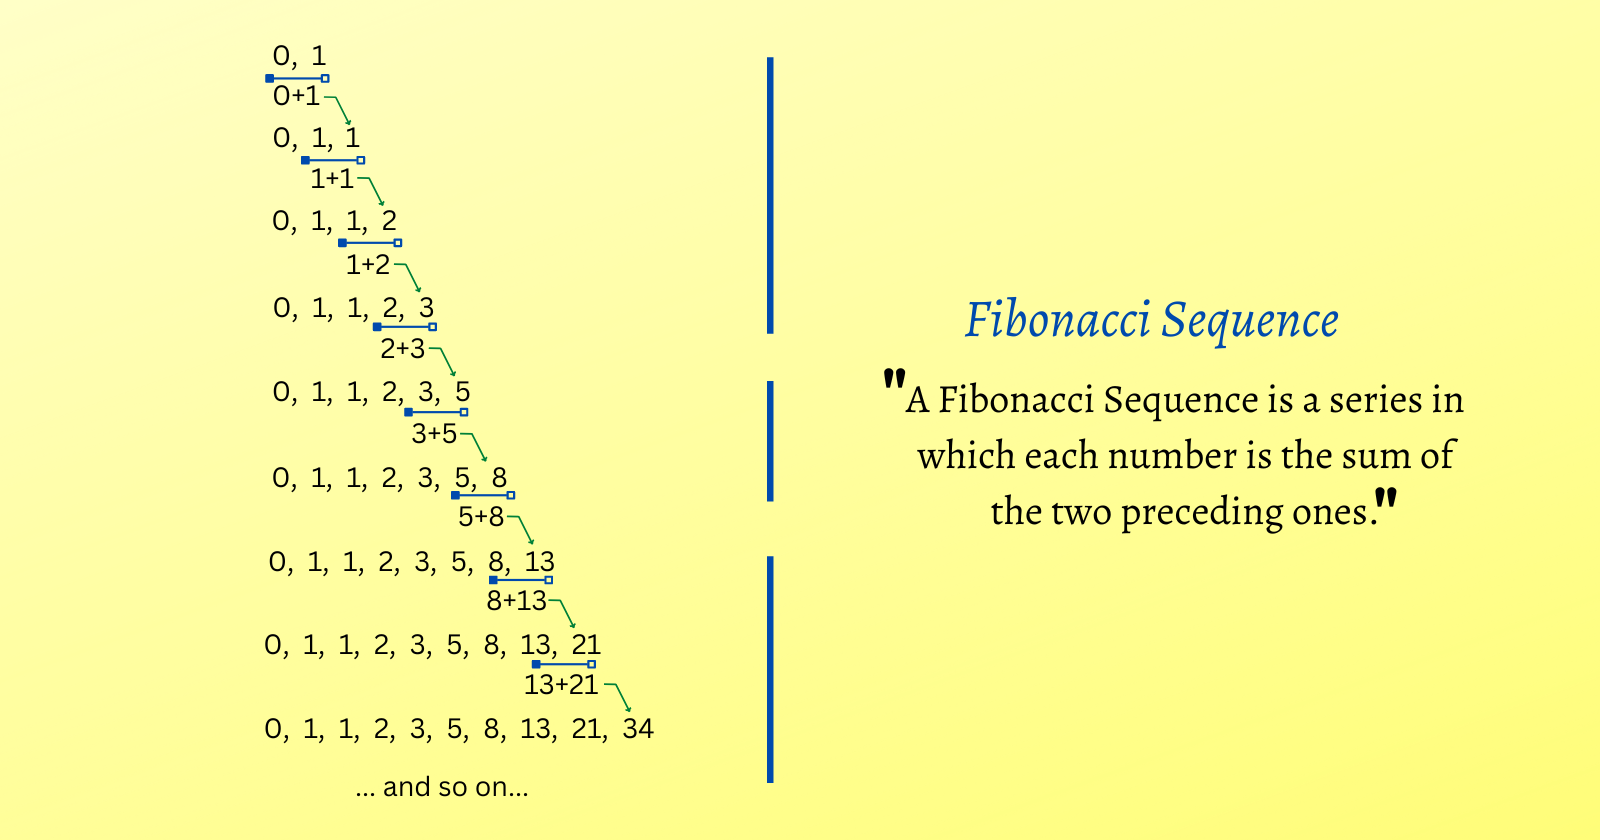 A Fibonacci Sequence